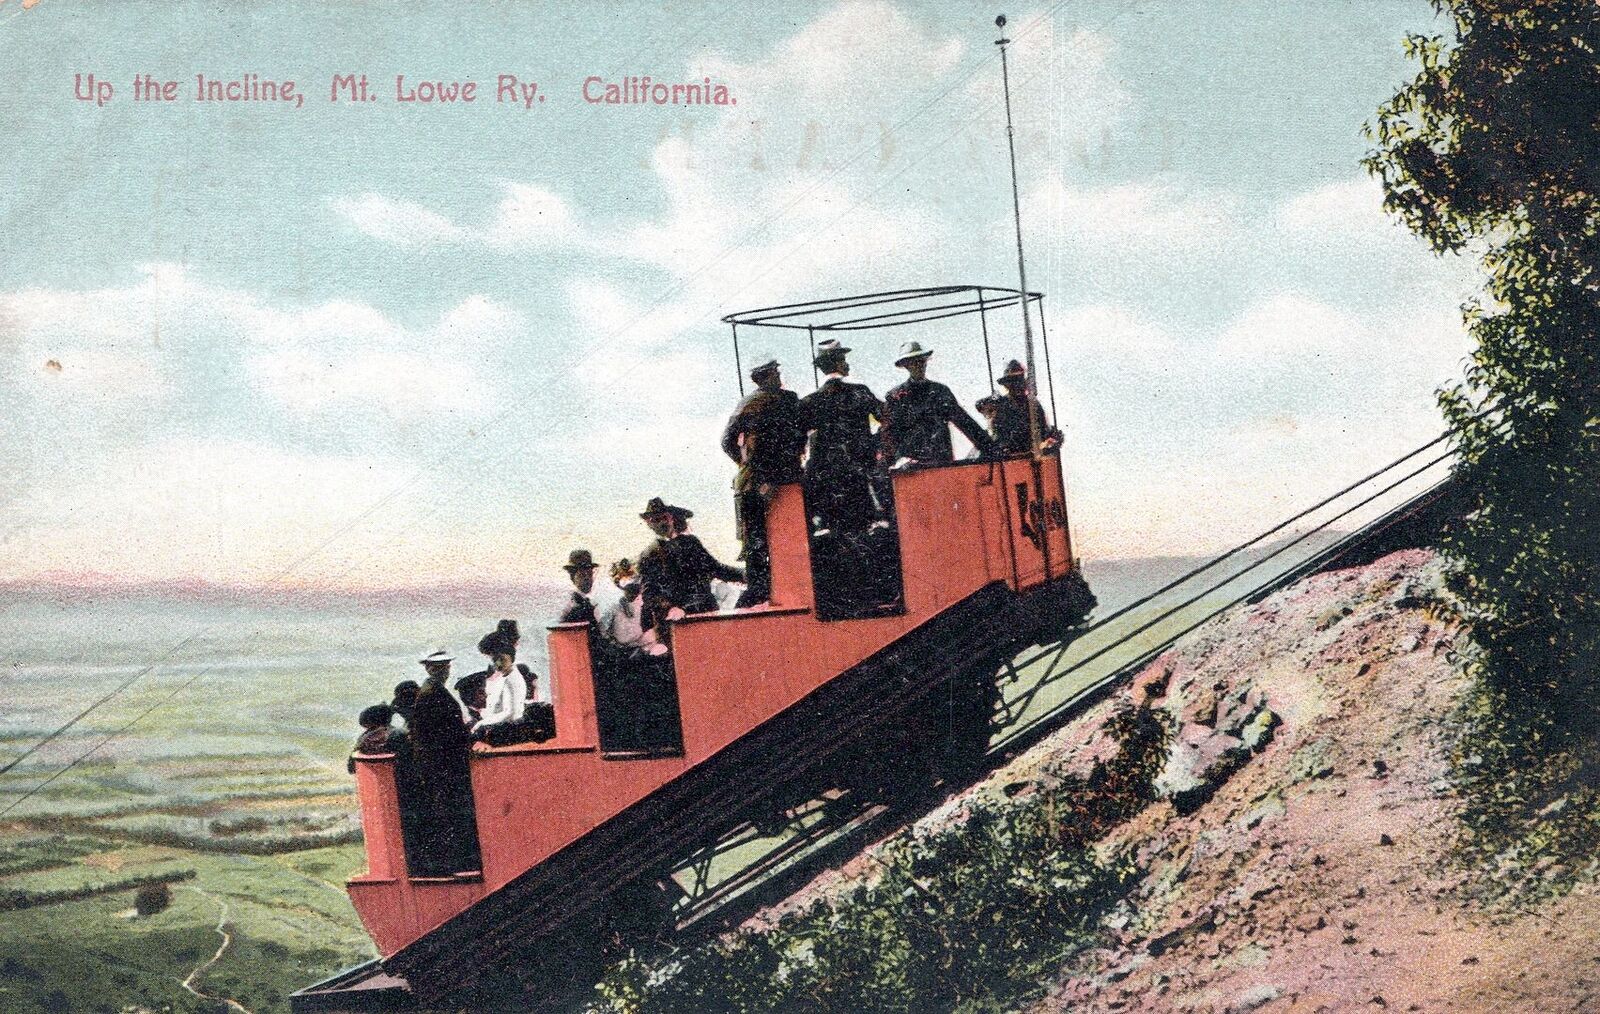 CALIFORNIA CA - Mt. Lowe Railway By The Incline Postcard